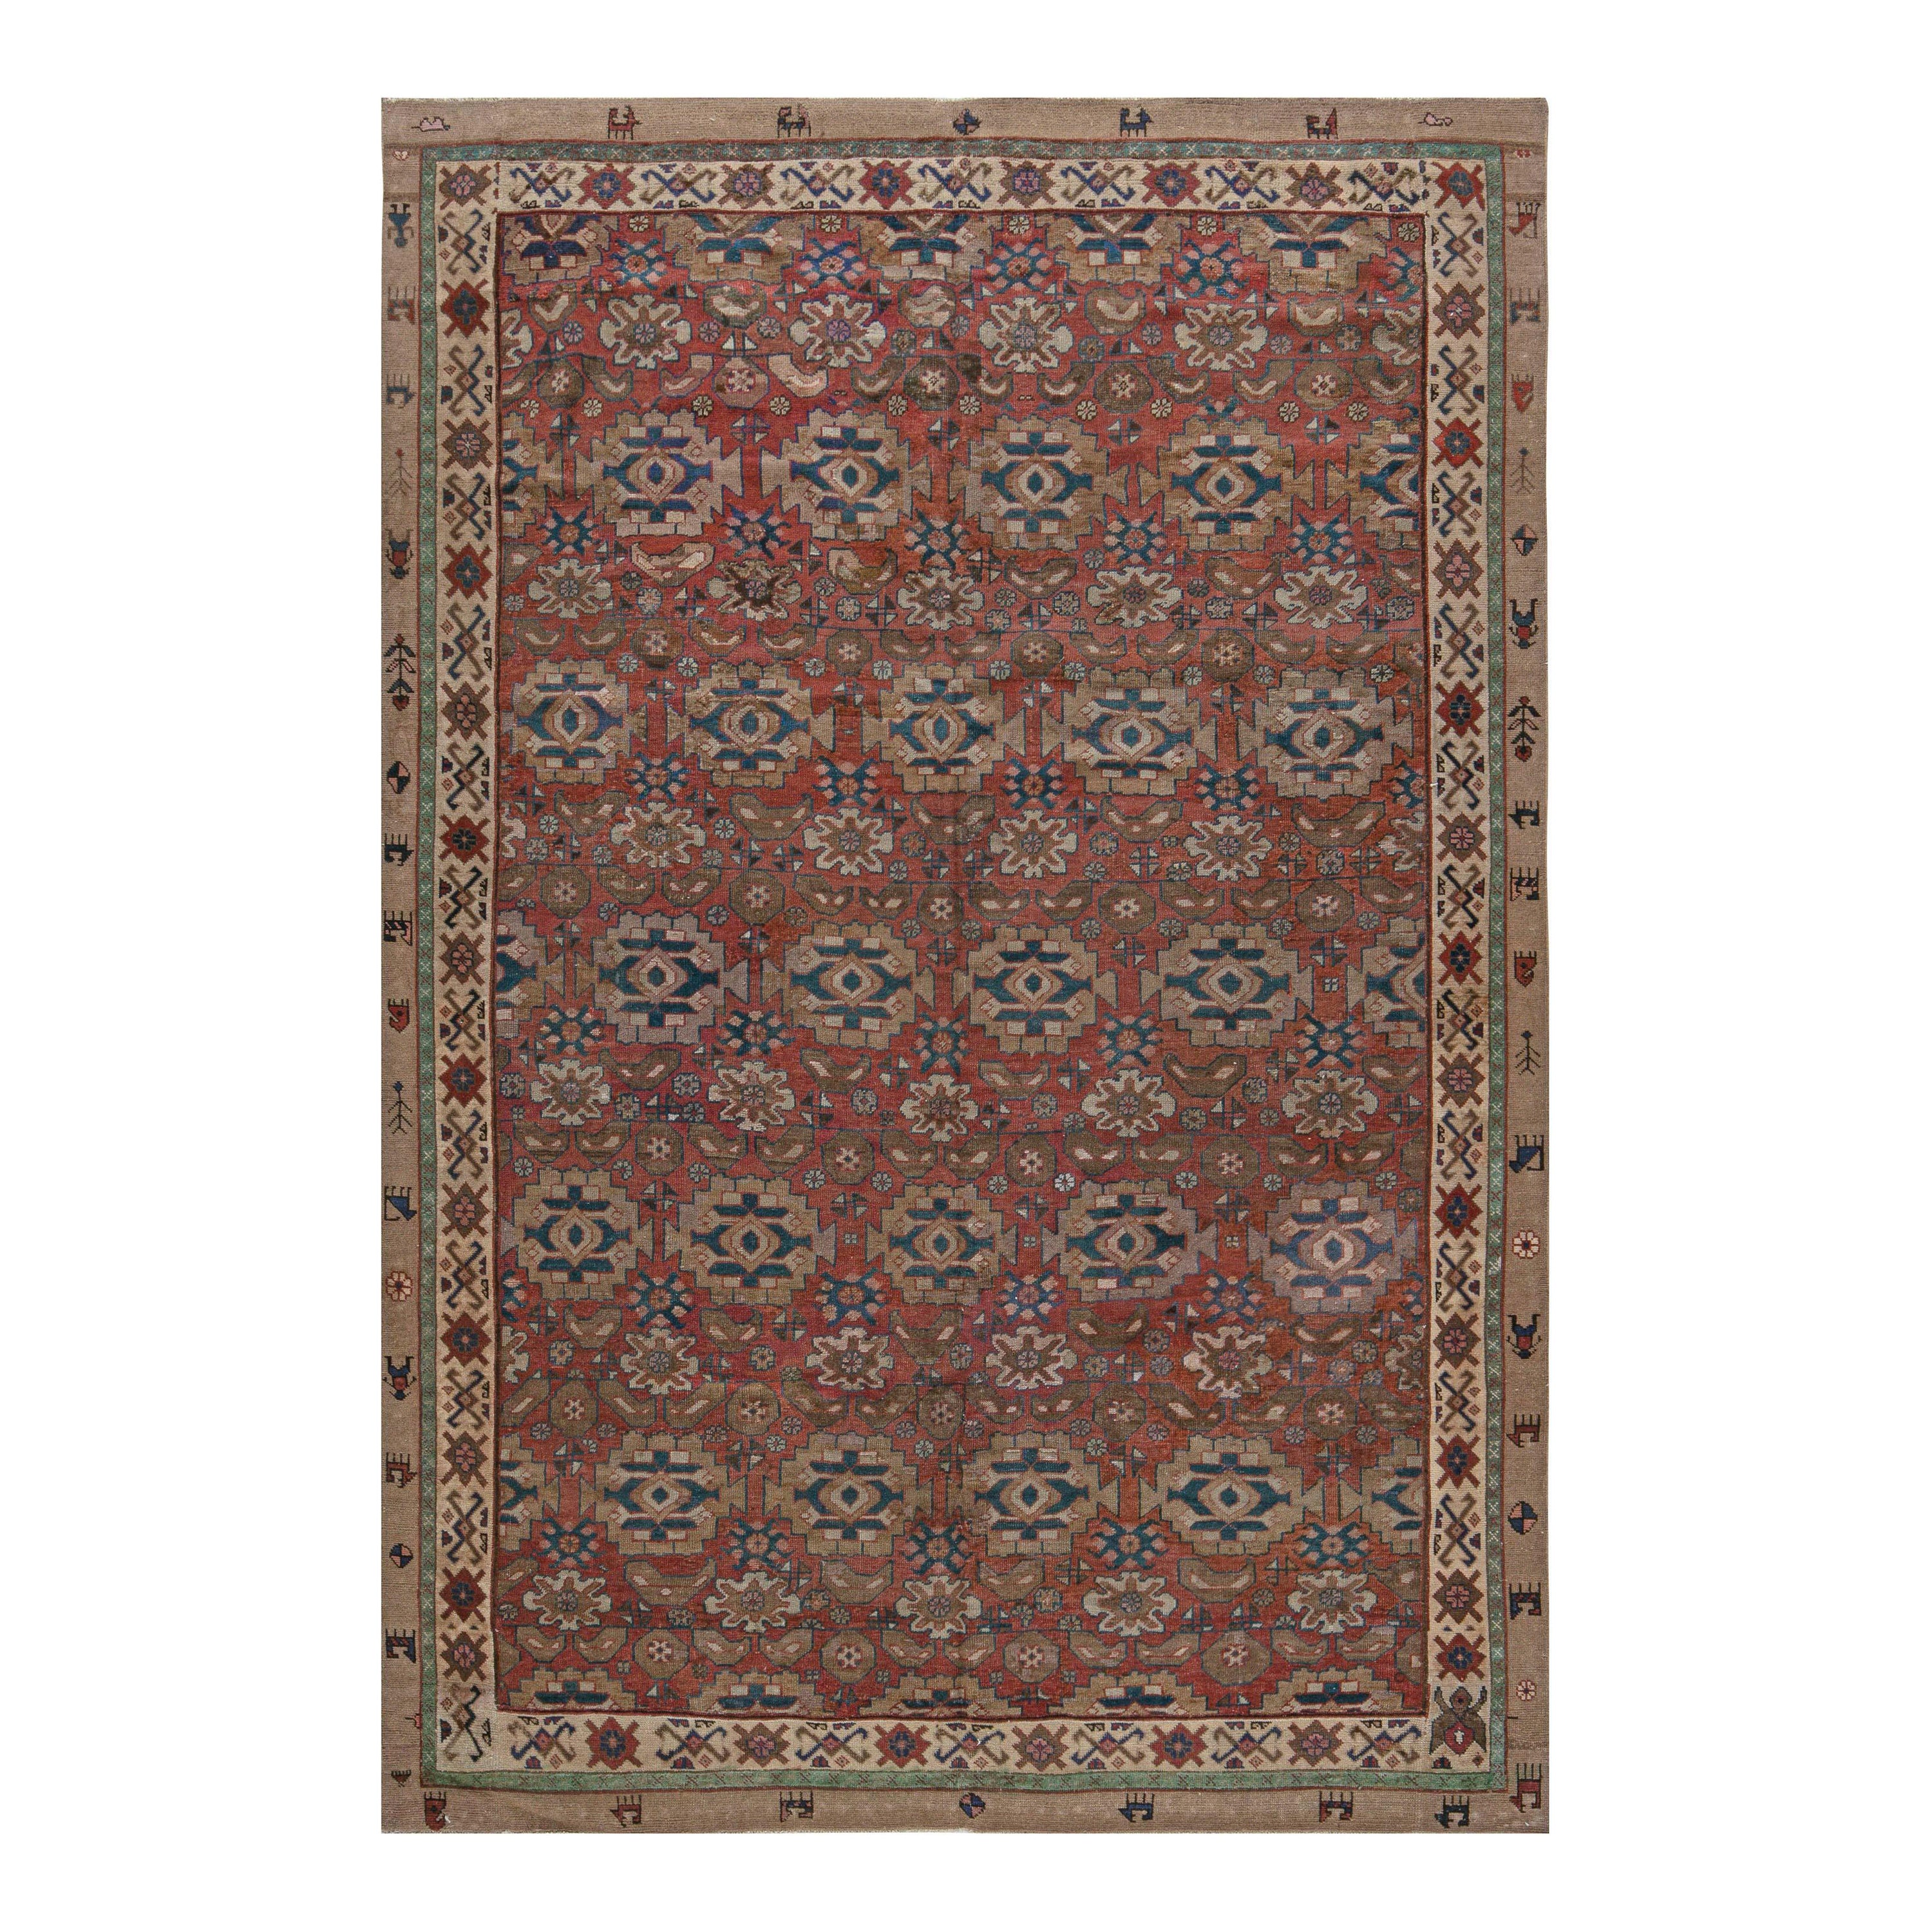 Early 20th Century Persian Bakshaish Red Handmade Wool Rug For Sale